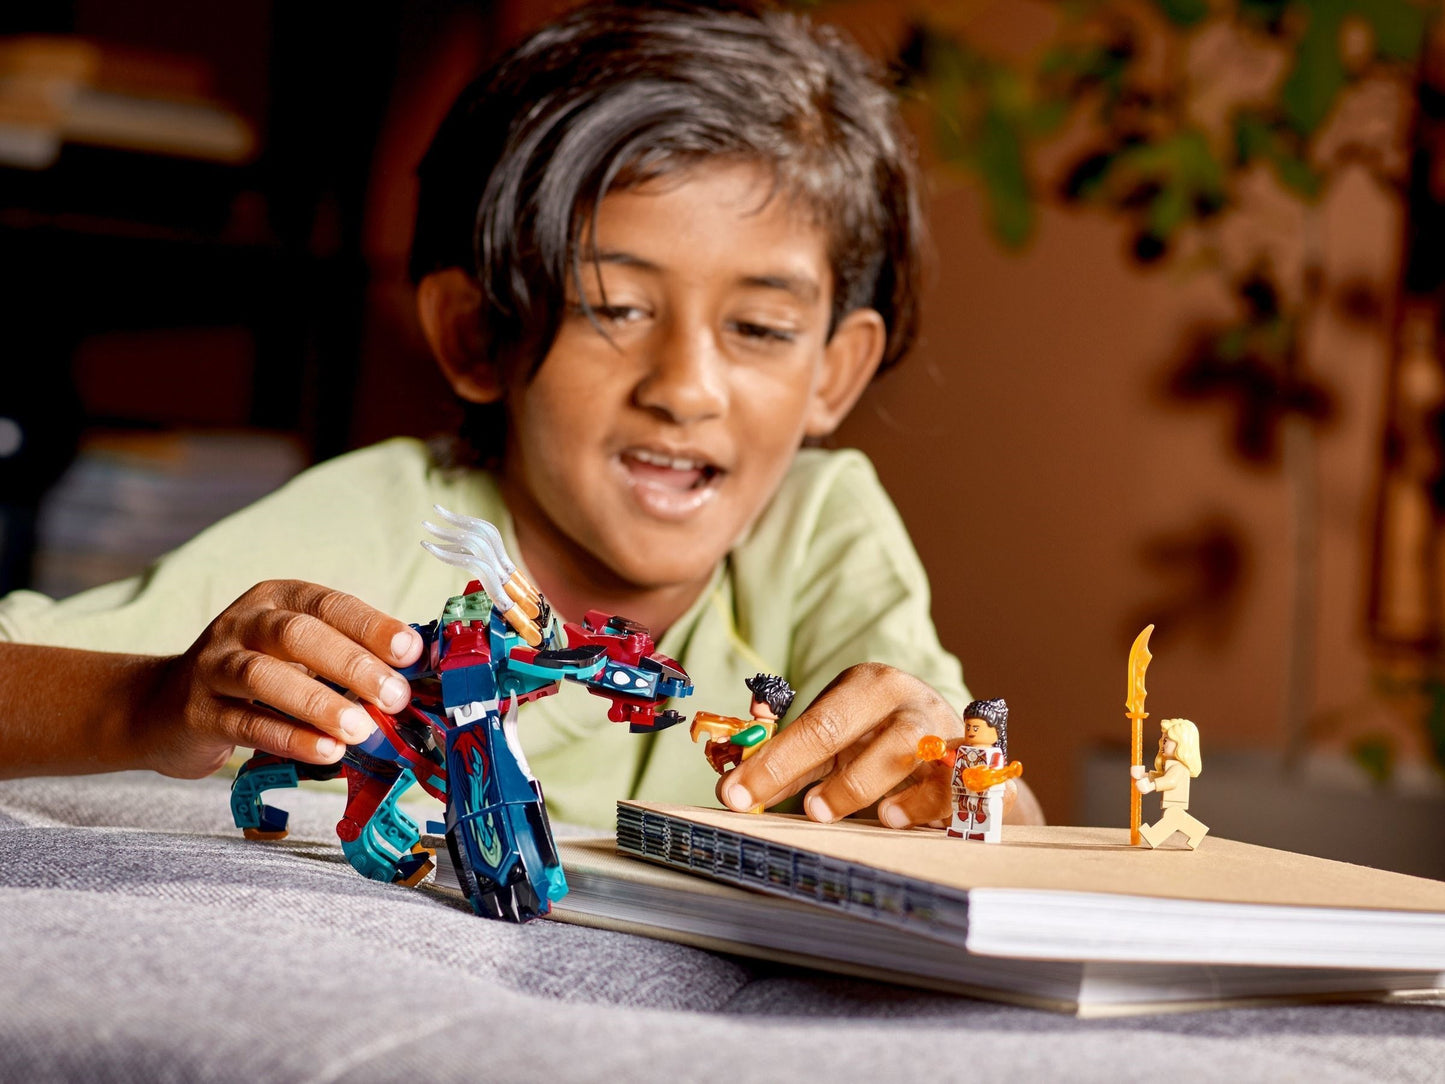 LEGO Super Heroes - Ambuscada Deviantului! 76154, 197 piese